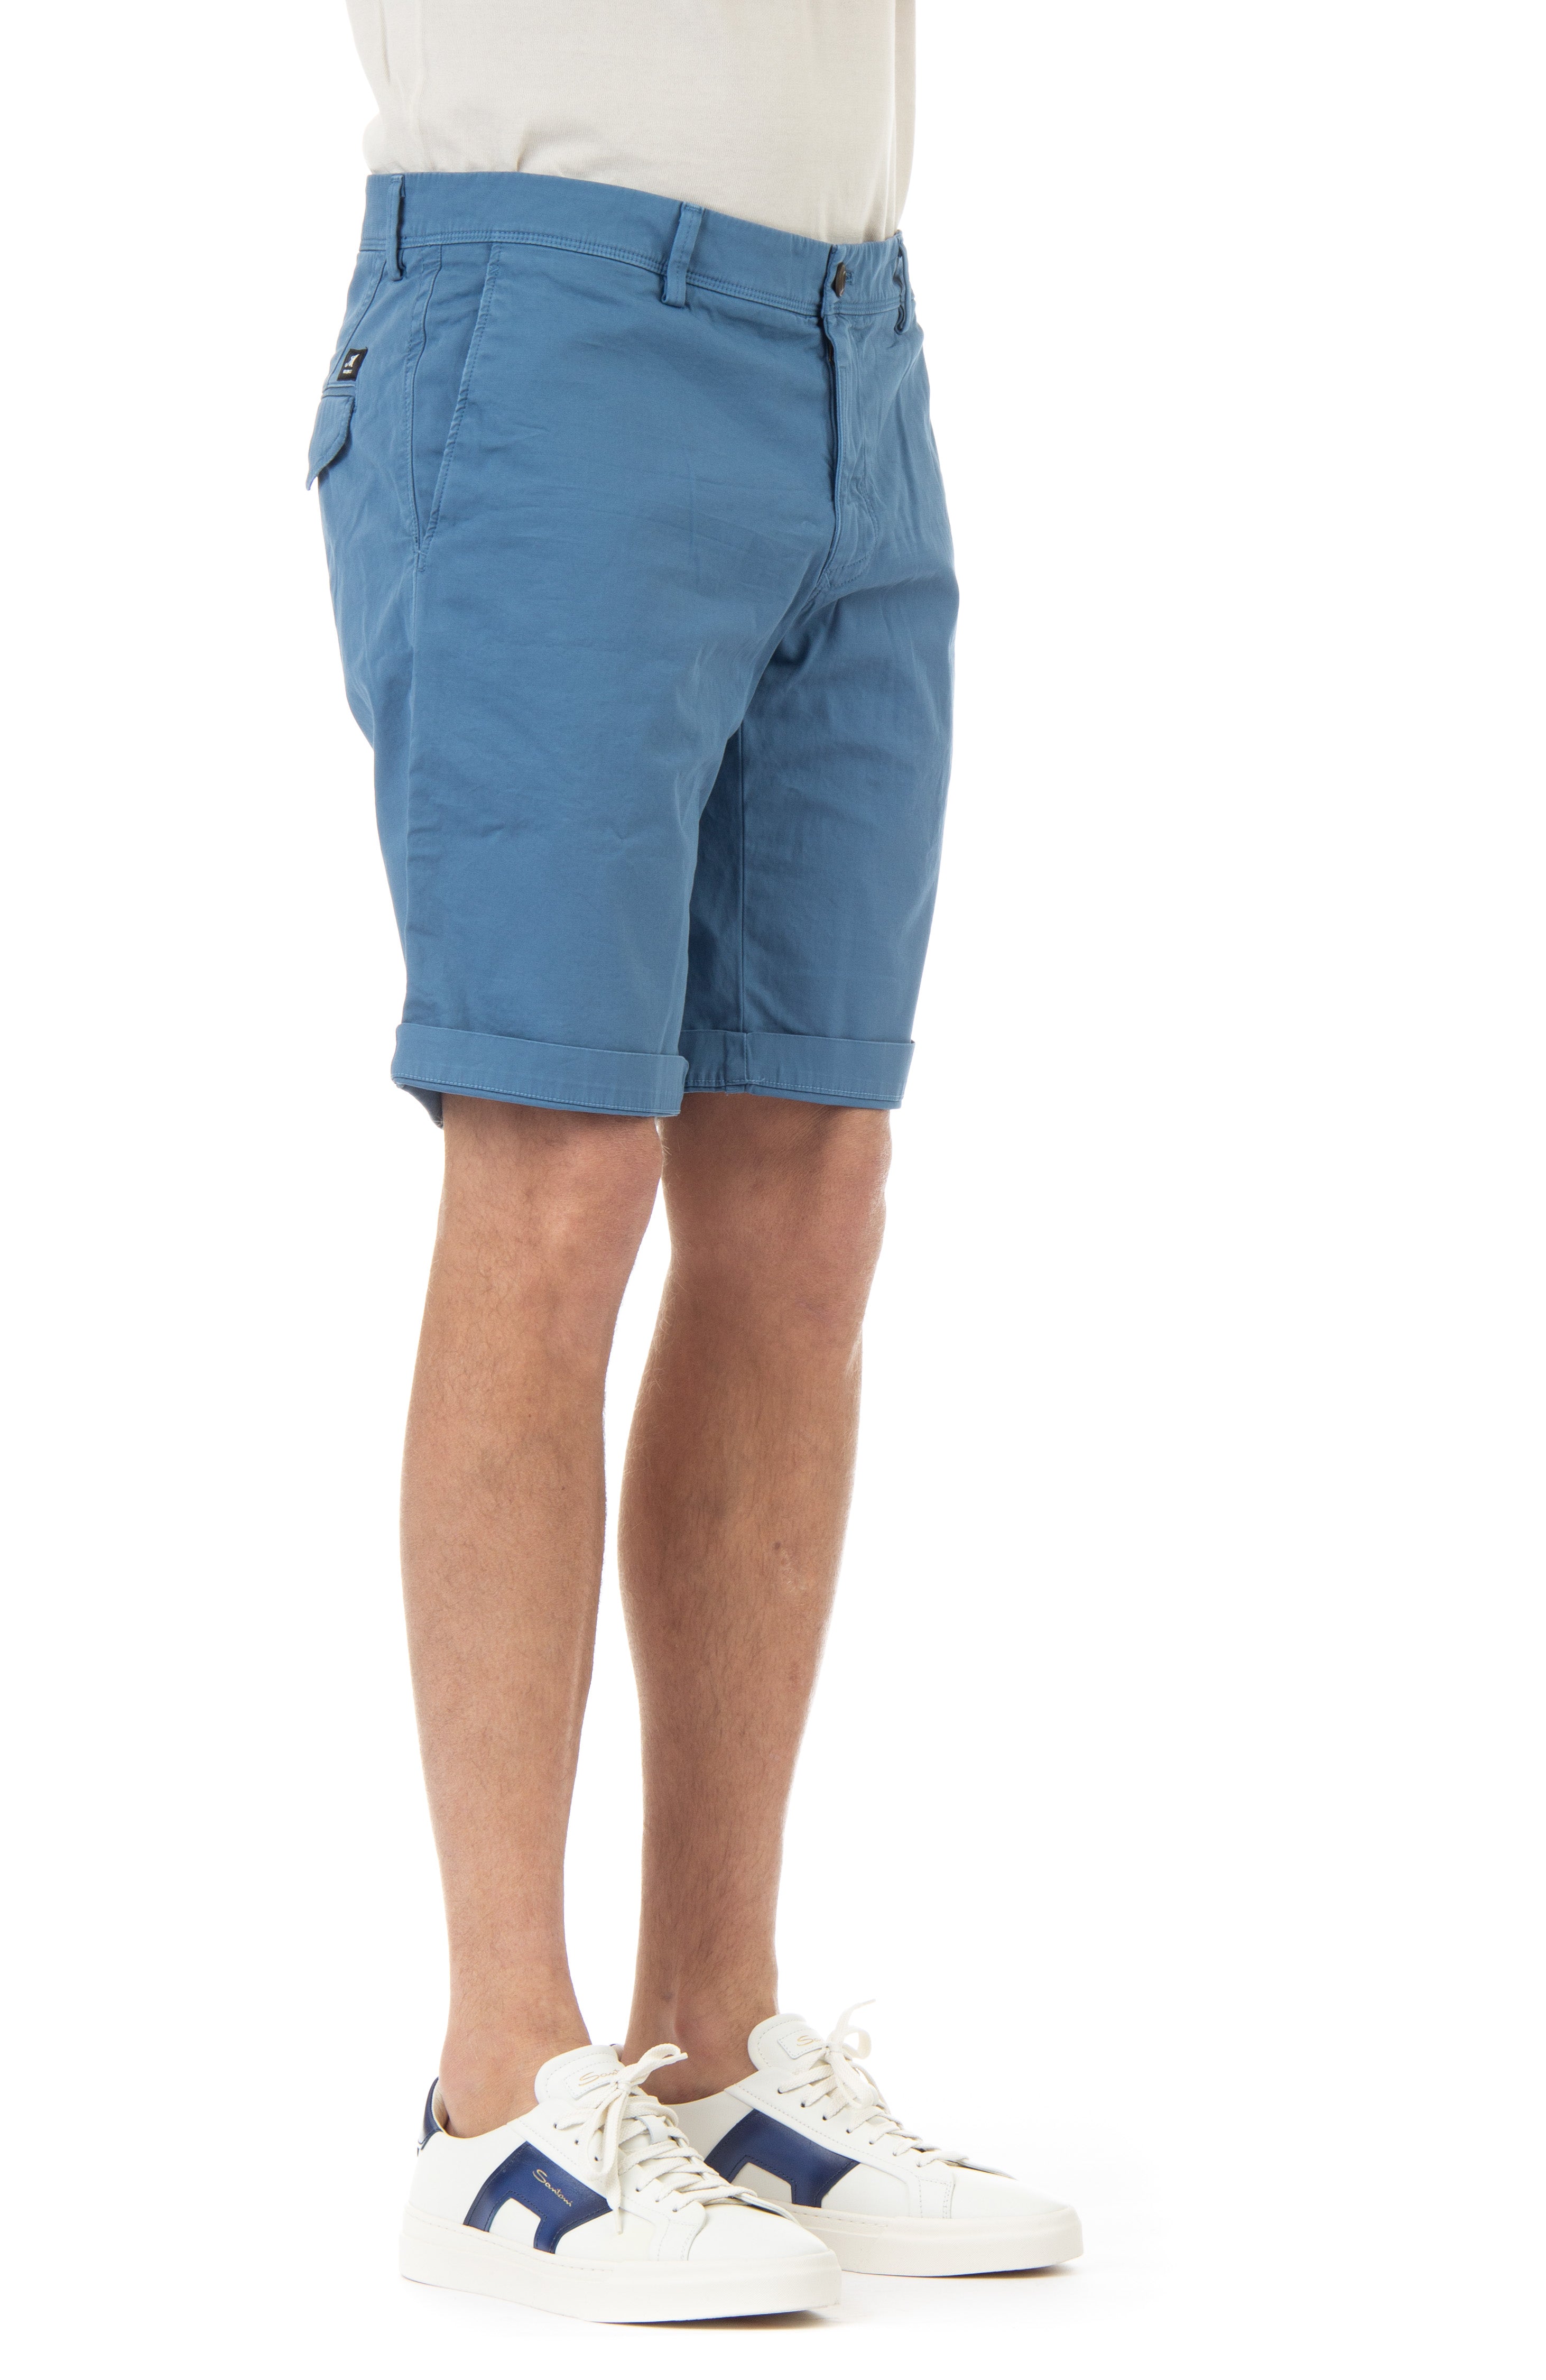 Eisenhower model cotton Bermuda shorts